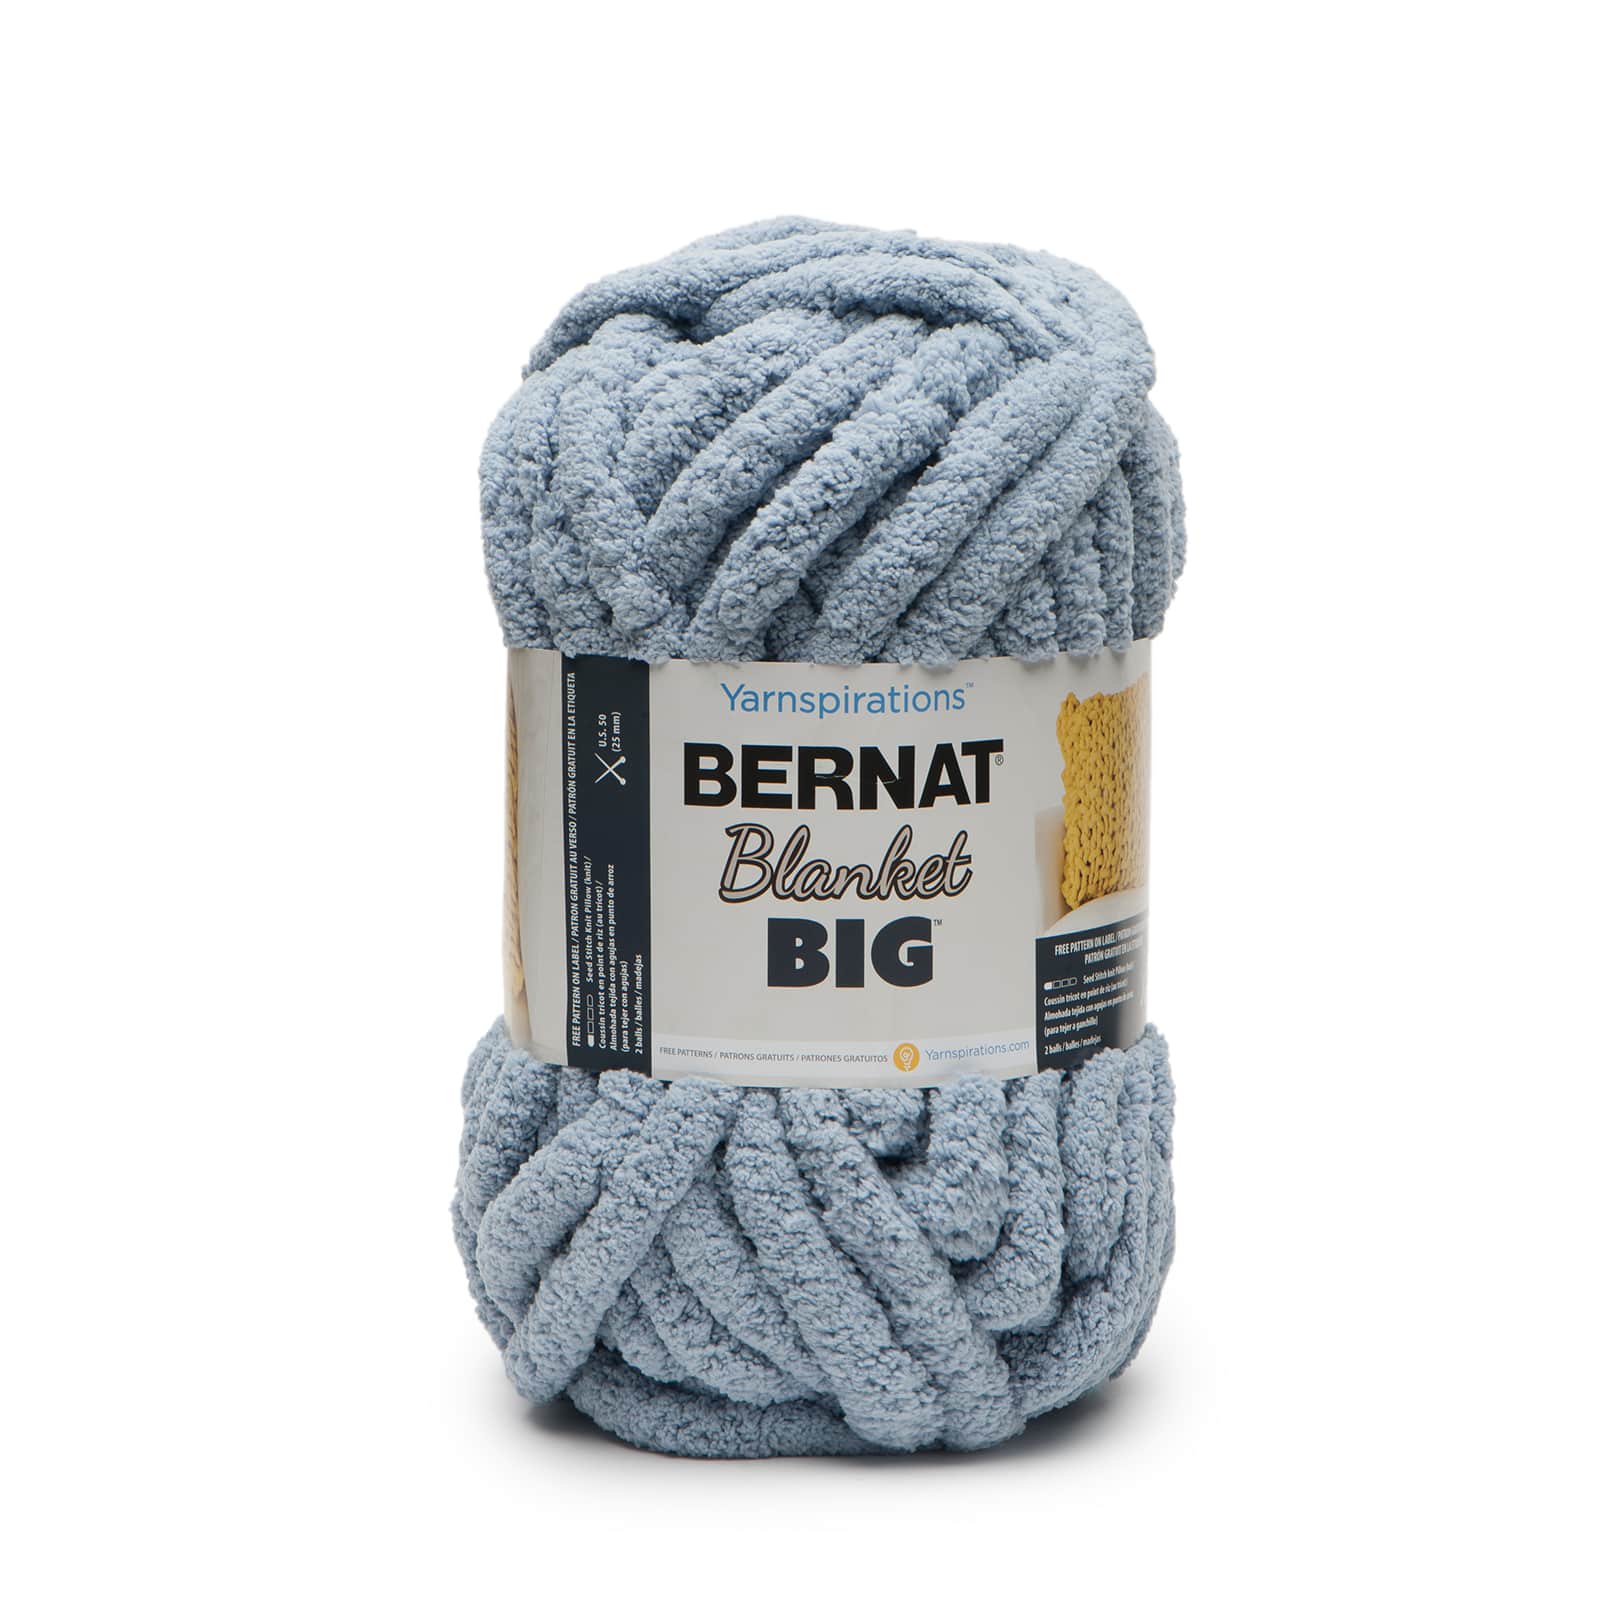 Bernat Blanket Big Yarn